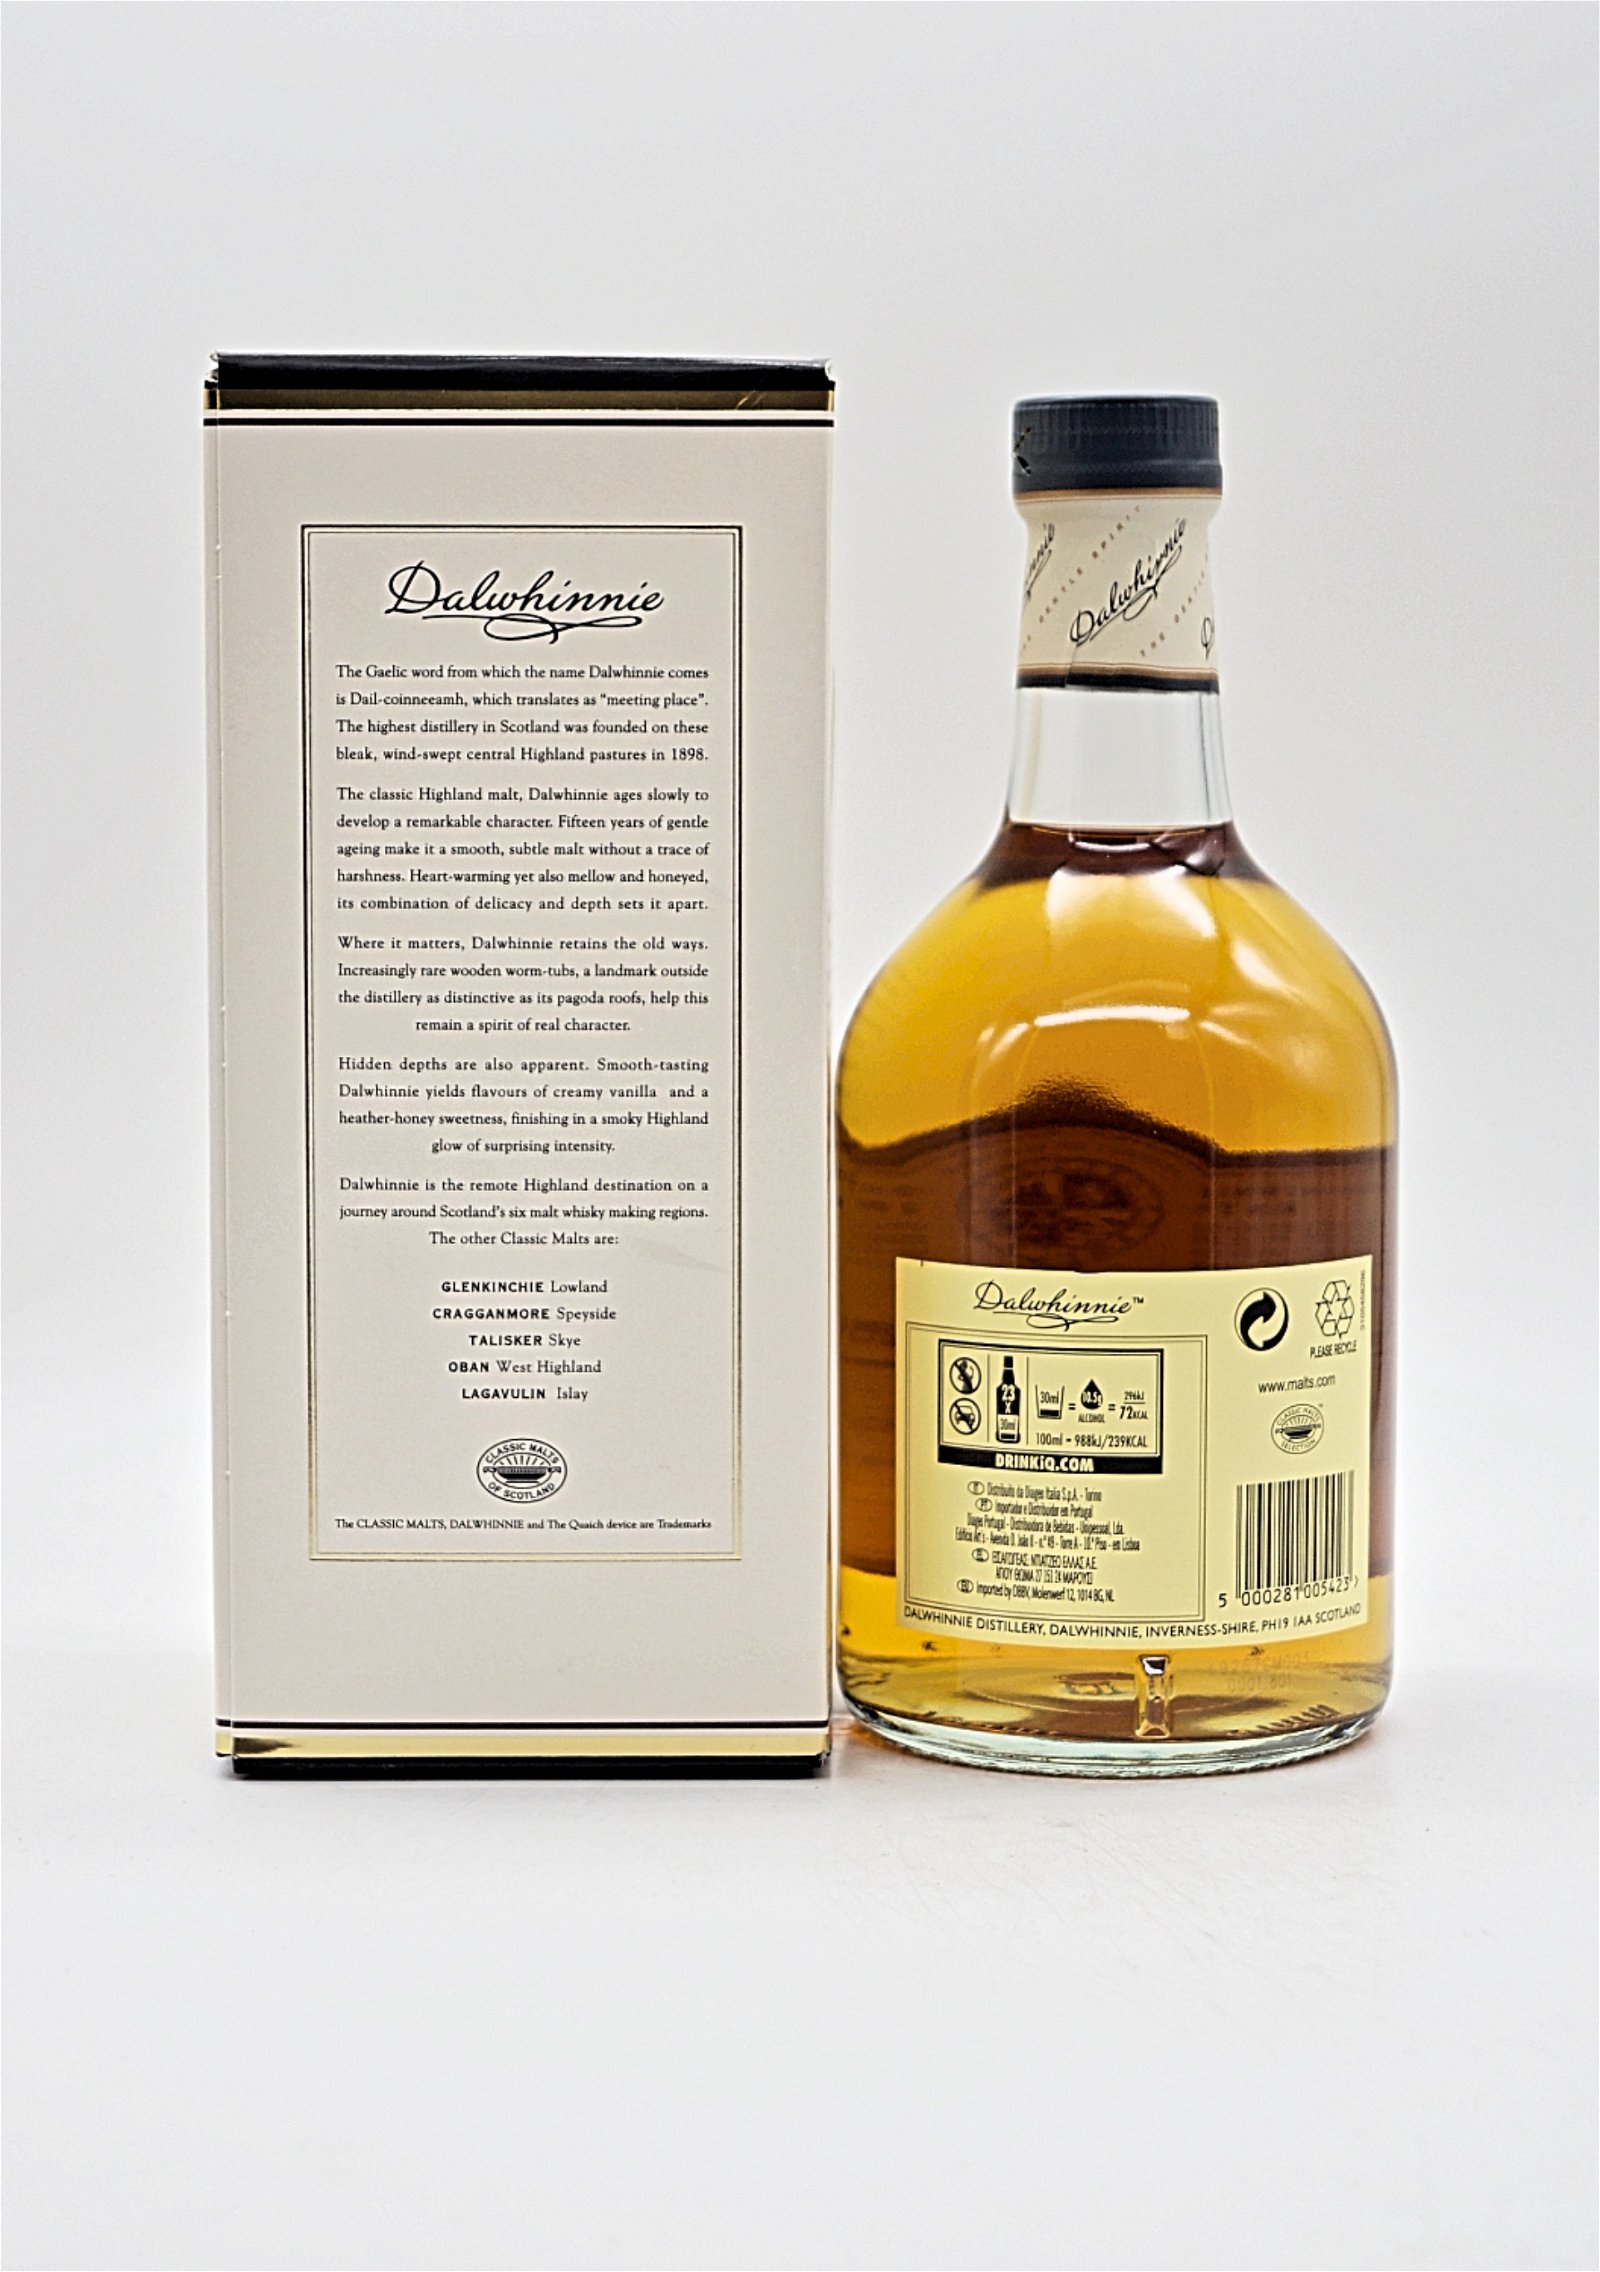 Dalwhinnie 15 Jahre Highland Single Malt Scotch Whisky